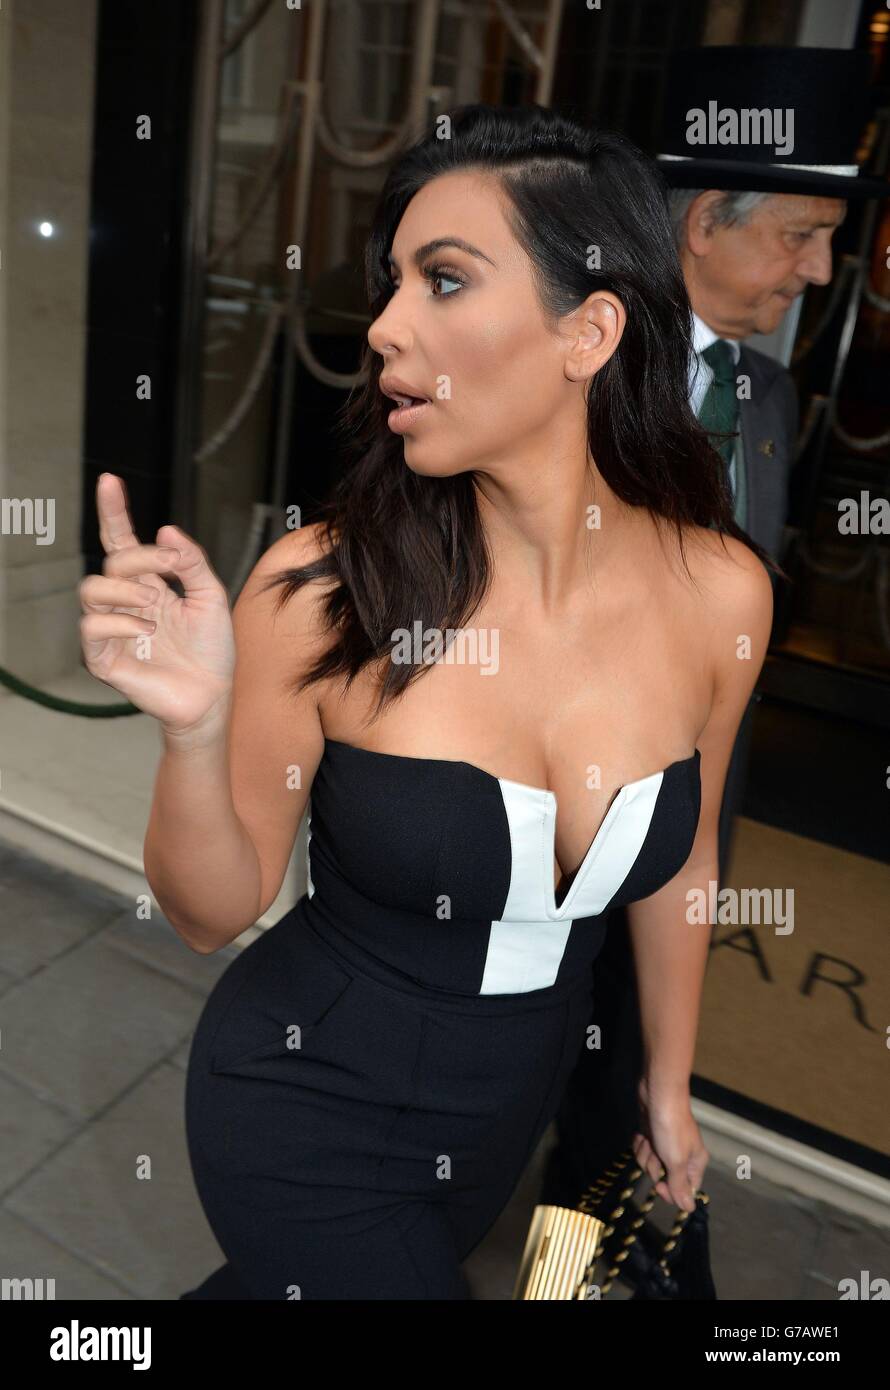 526 Kim Kardashian Dash Stock Photos, High-Res Pictures, and